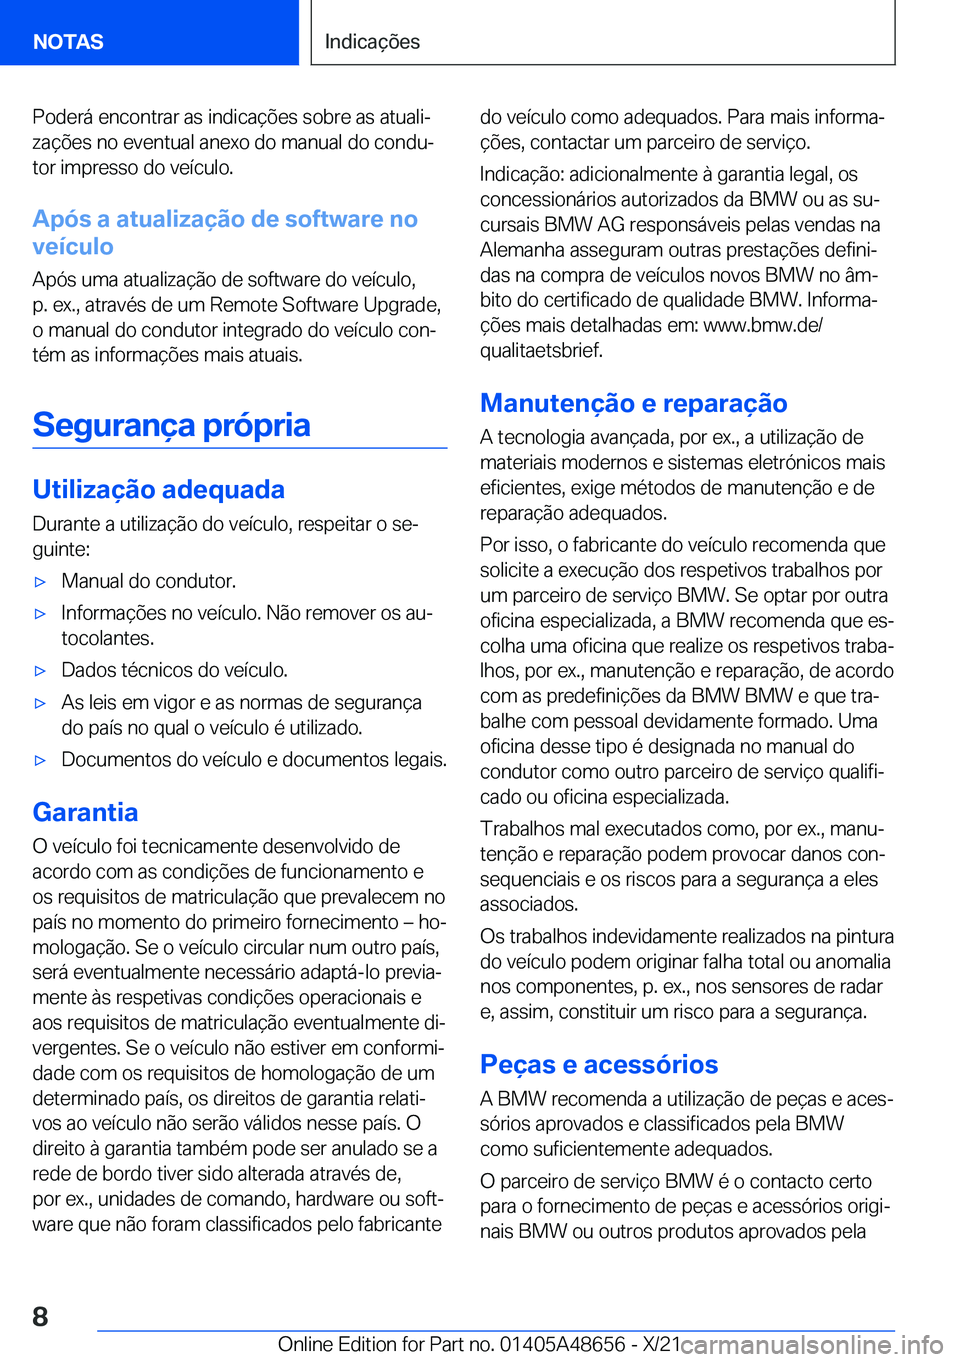 BMW 3 SERIES 2022  Manual do condutor (in Portuguese) �P�o�d�e�r�á��e�n�c�o�n�t�r�a�r��a�s��i�n�d�i�c�a�